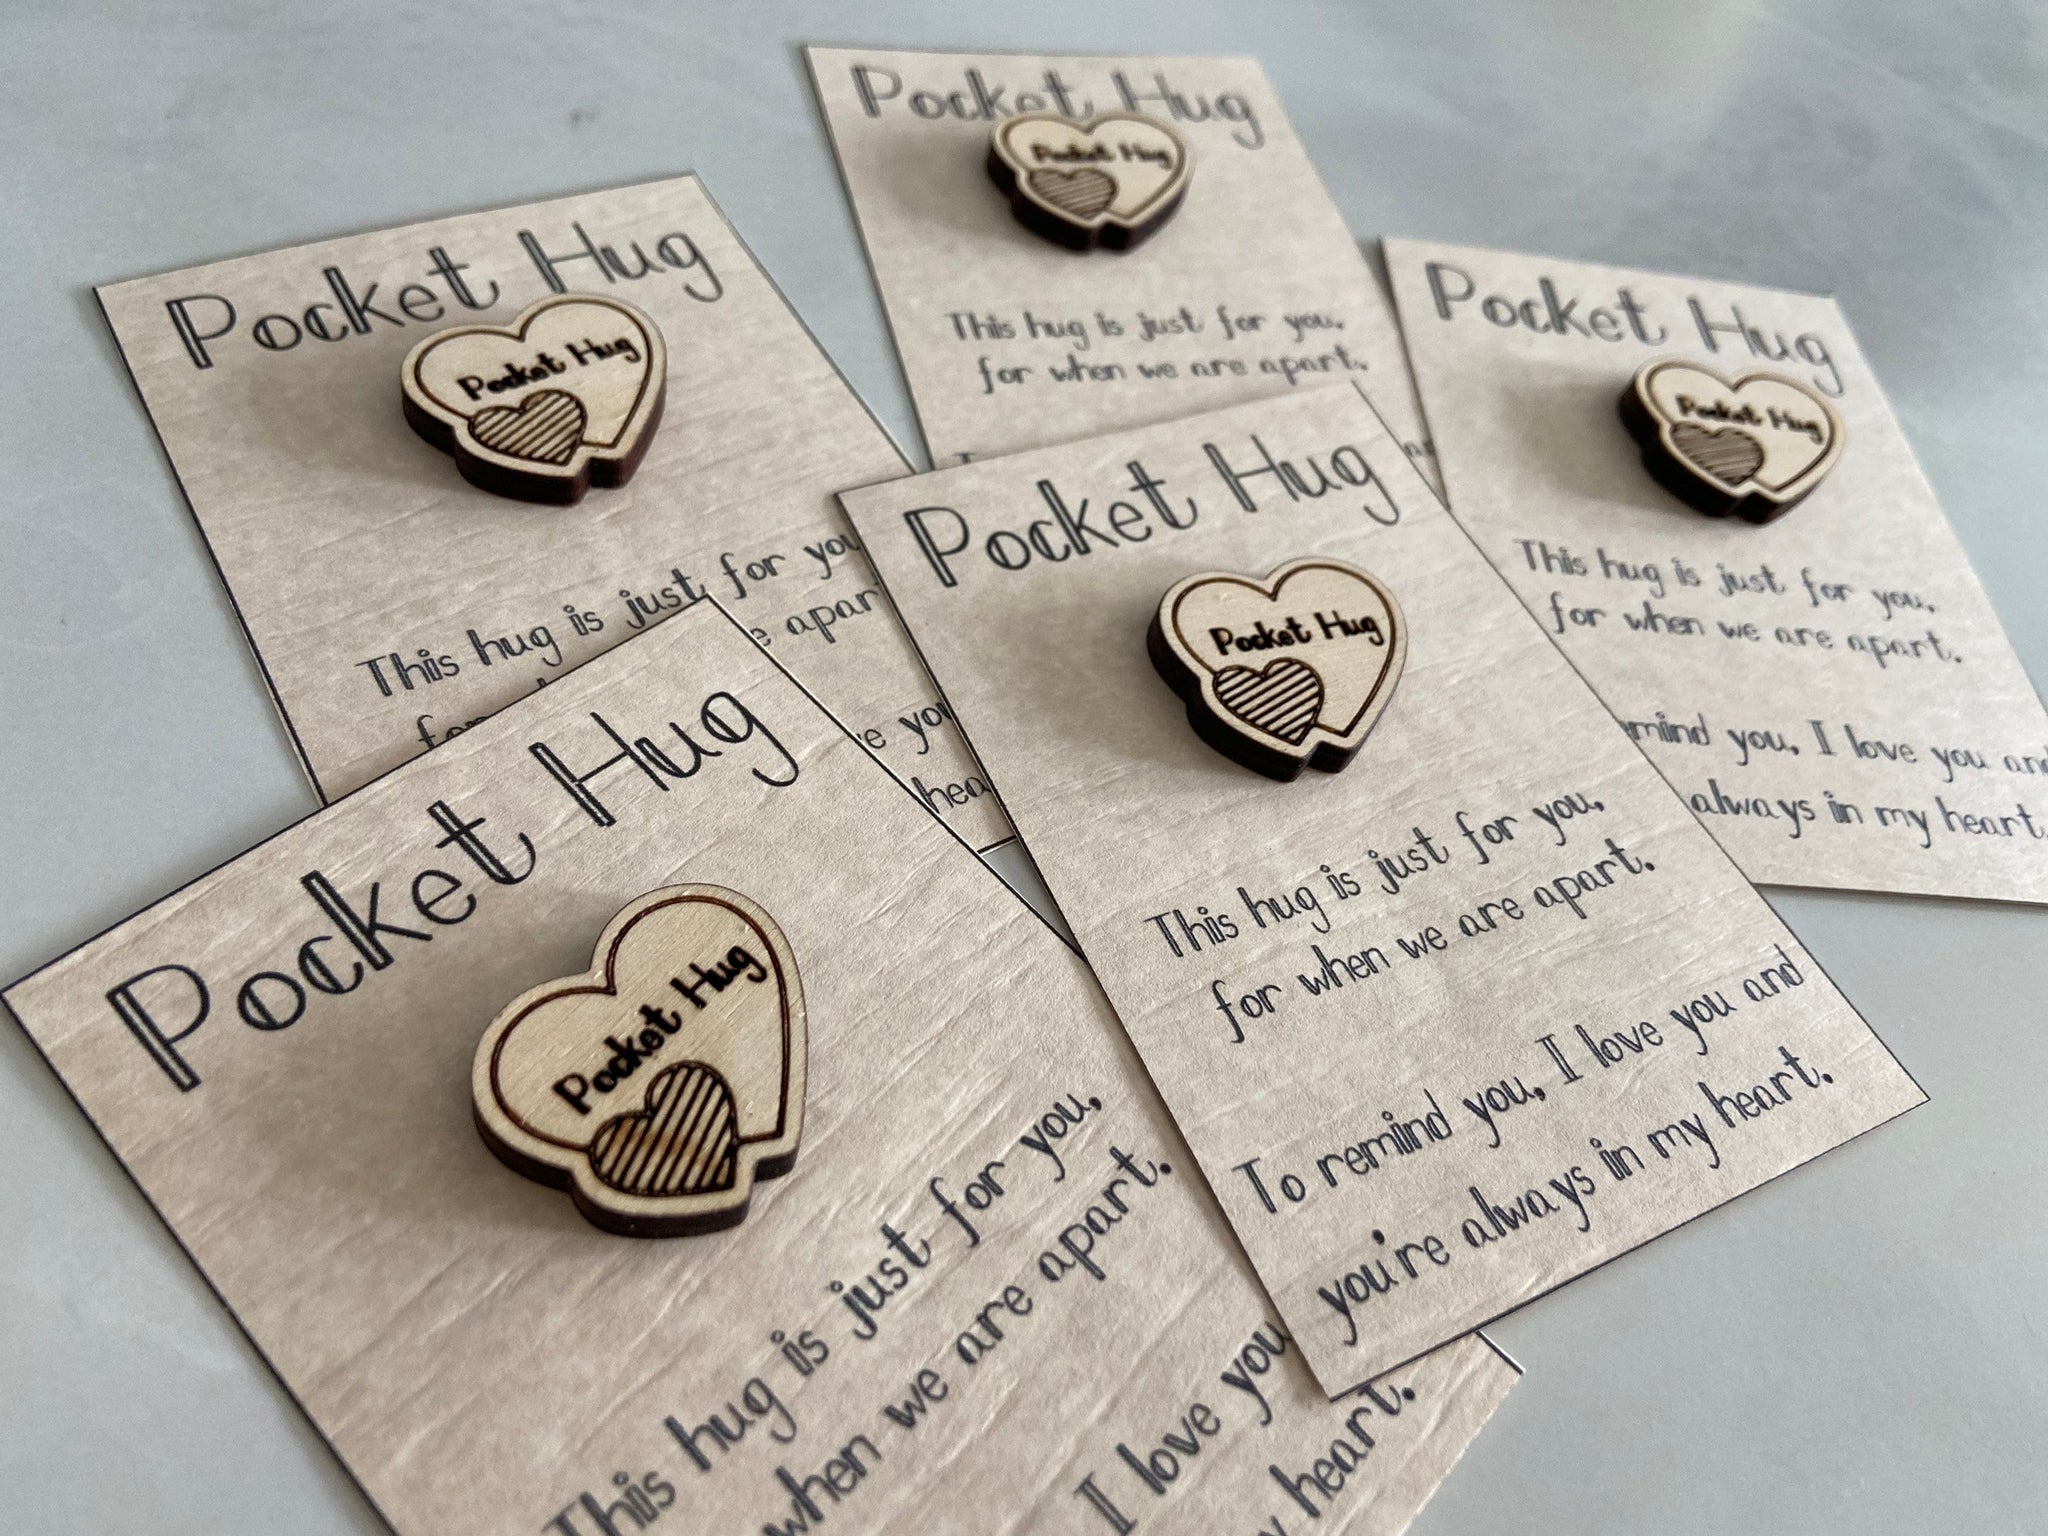 Handcrafted Wooden Pocket Hug Heart the Perfect Keepsake Gift